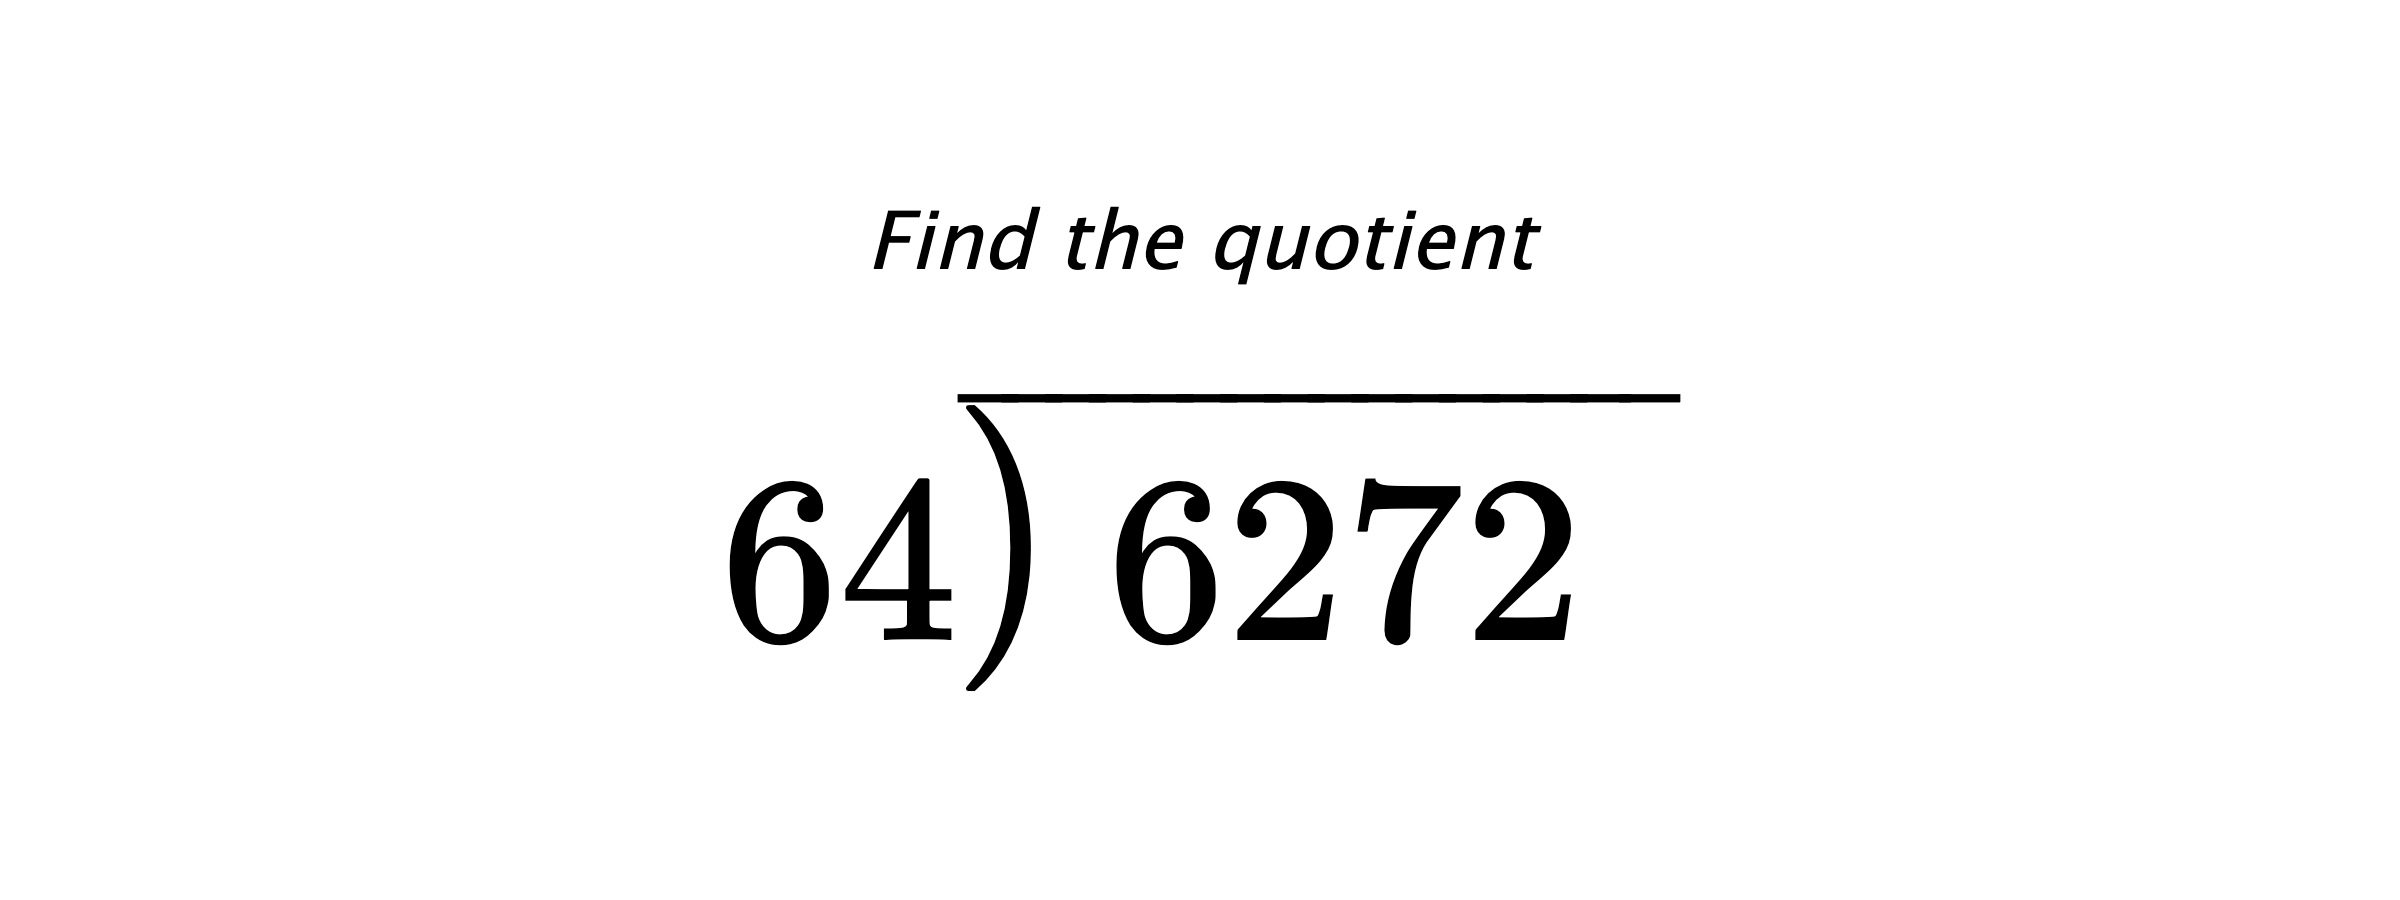 Find the quotient $ 64{\overline{\smash{\raise.3ex\hbox{$\big)$}}\,6272\phantom{)}}} $